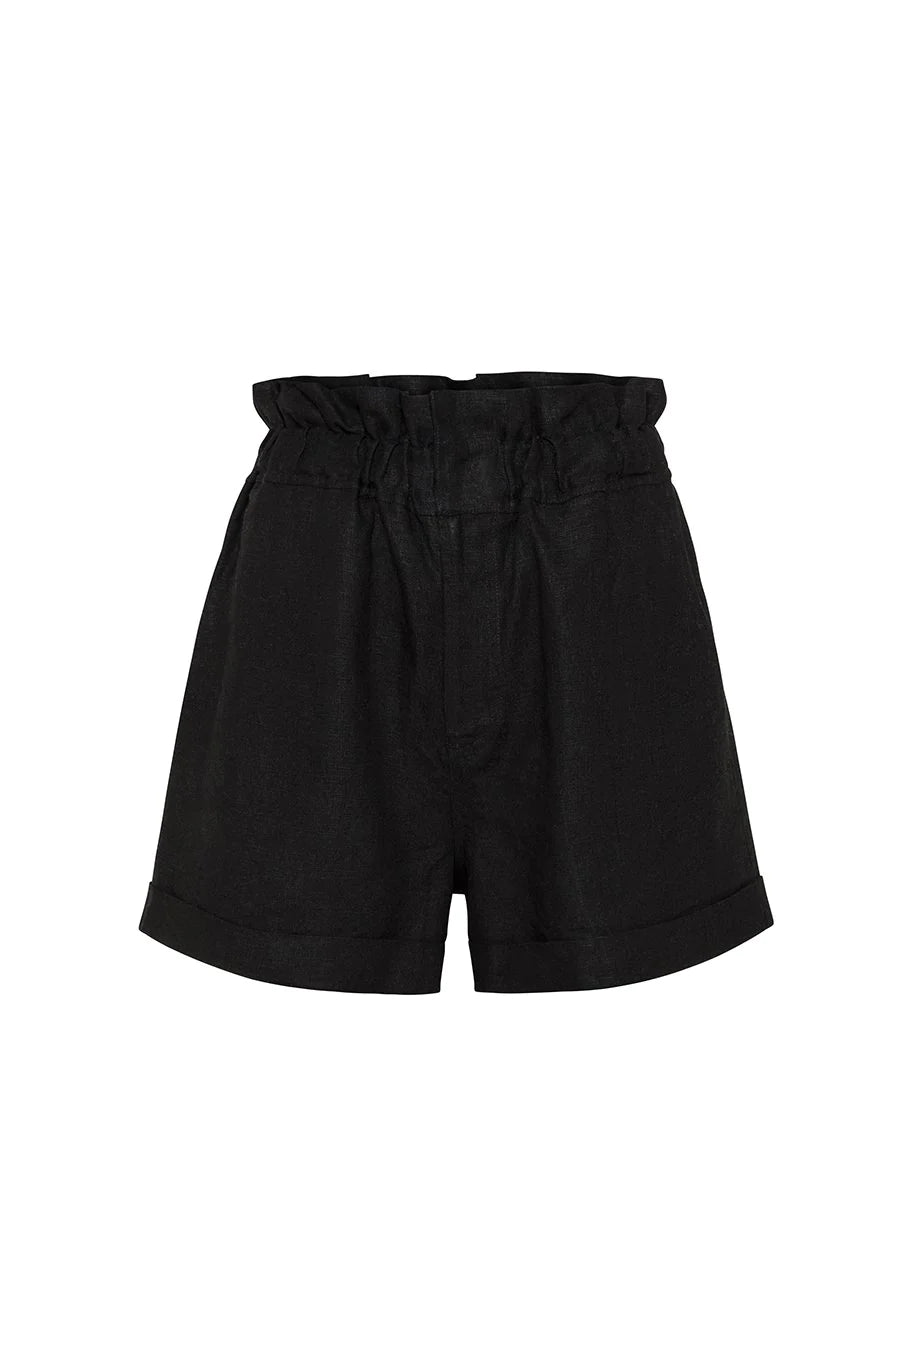 Ducky Shorts in Black